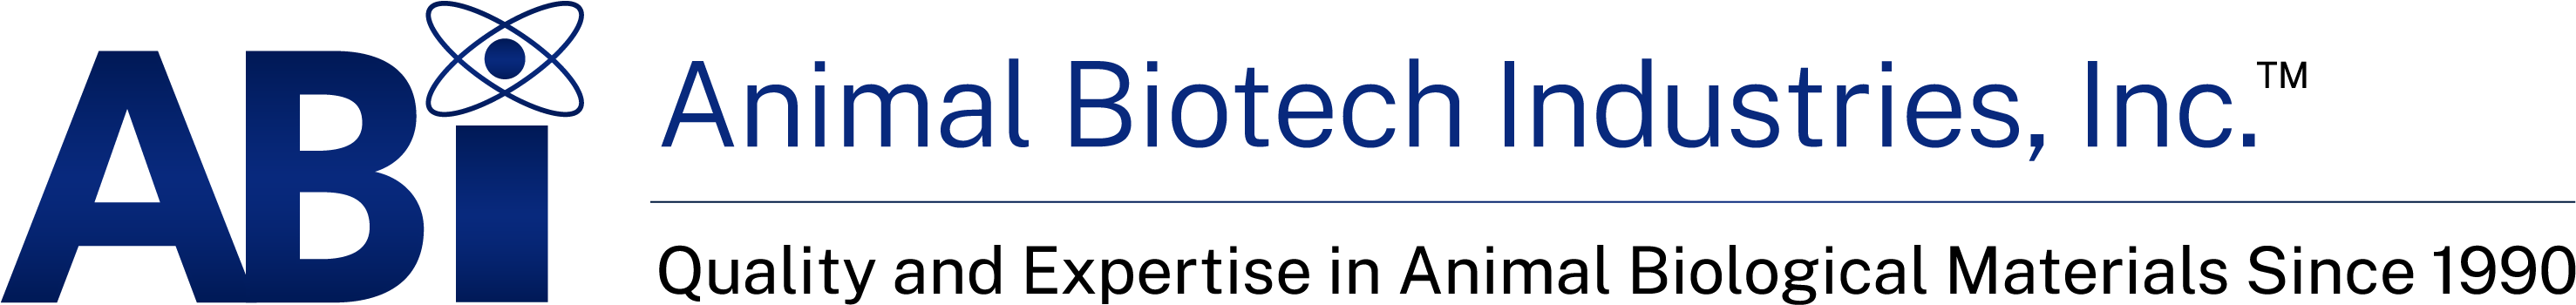 Animal Biotech Industries, Inc. Logo Trademarked